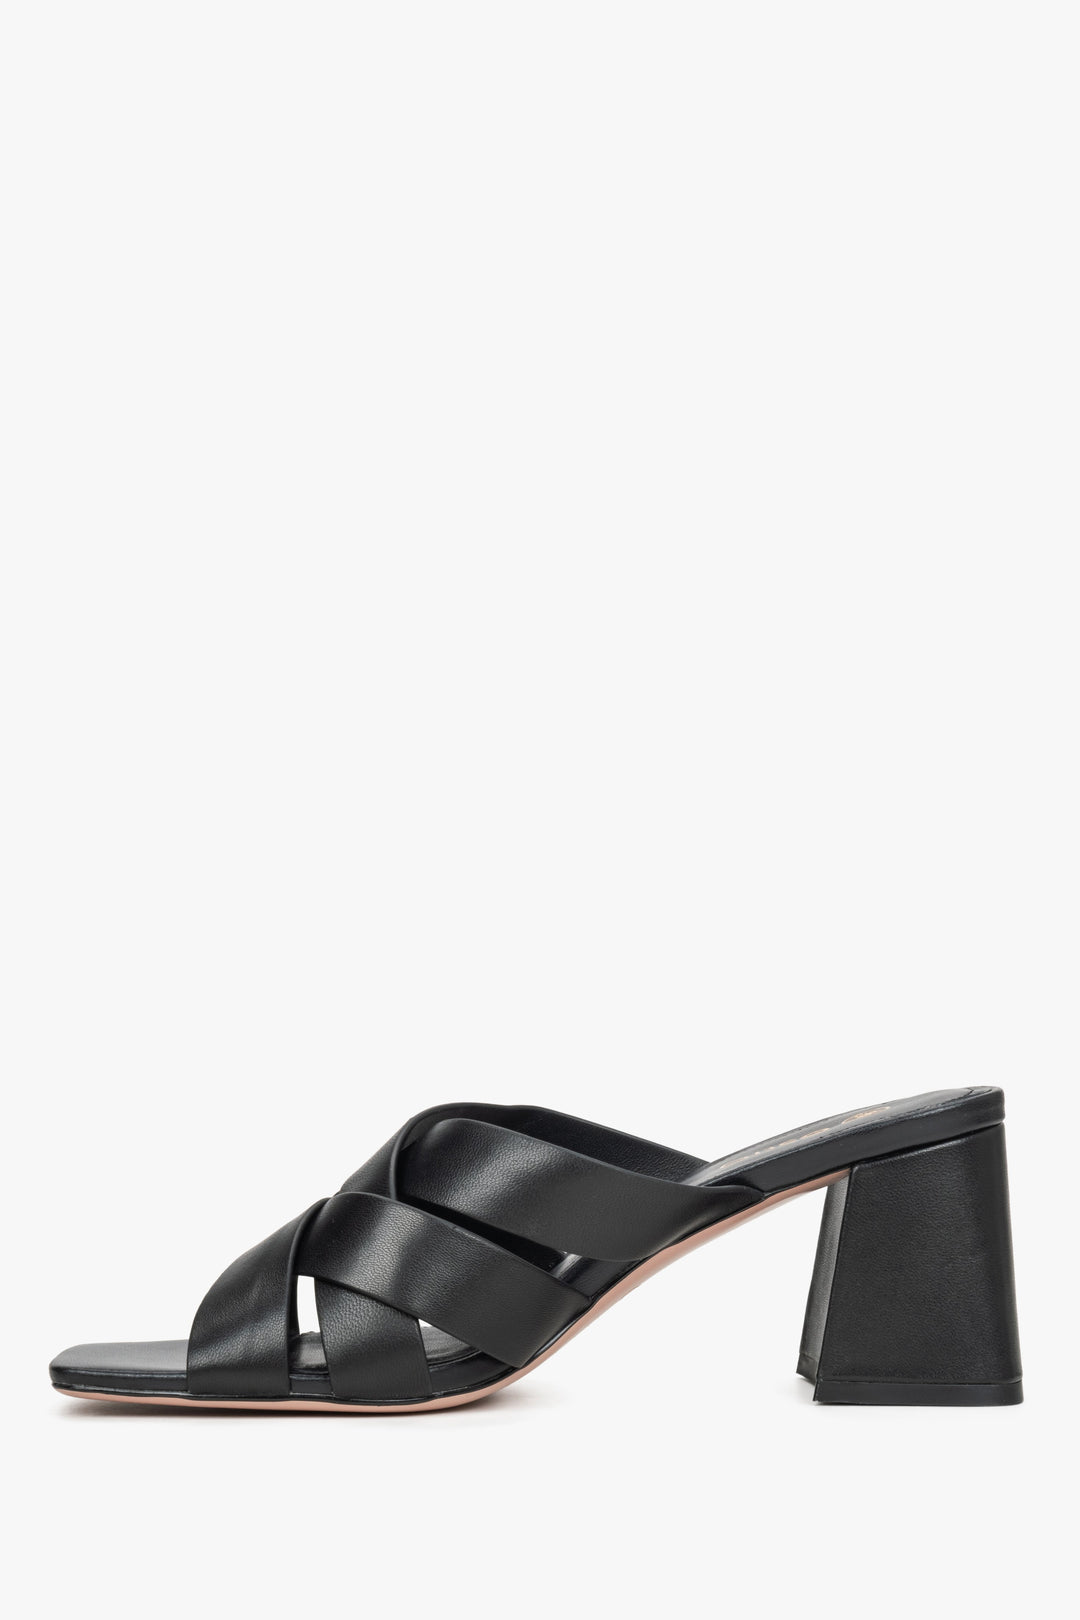 Estro women's black sandals with a block heel - shoe profile.